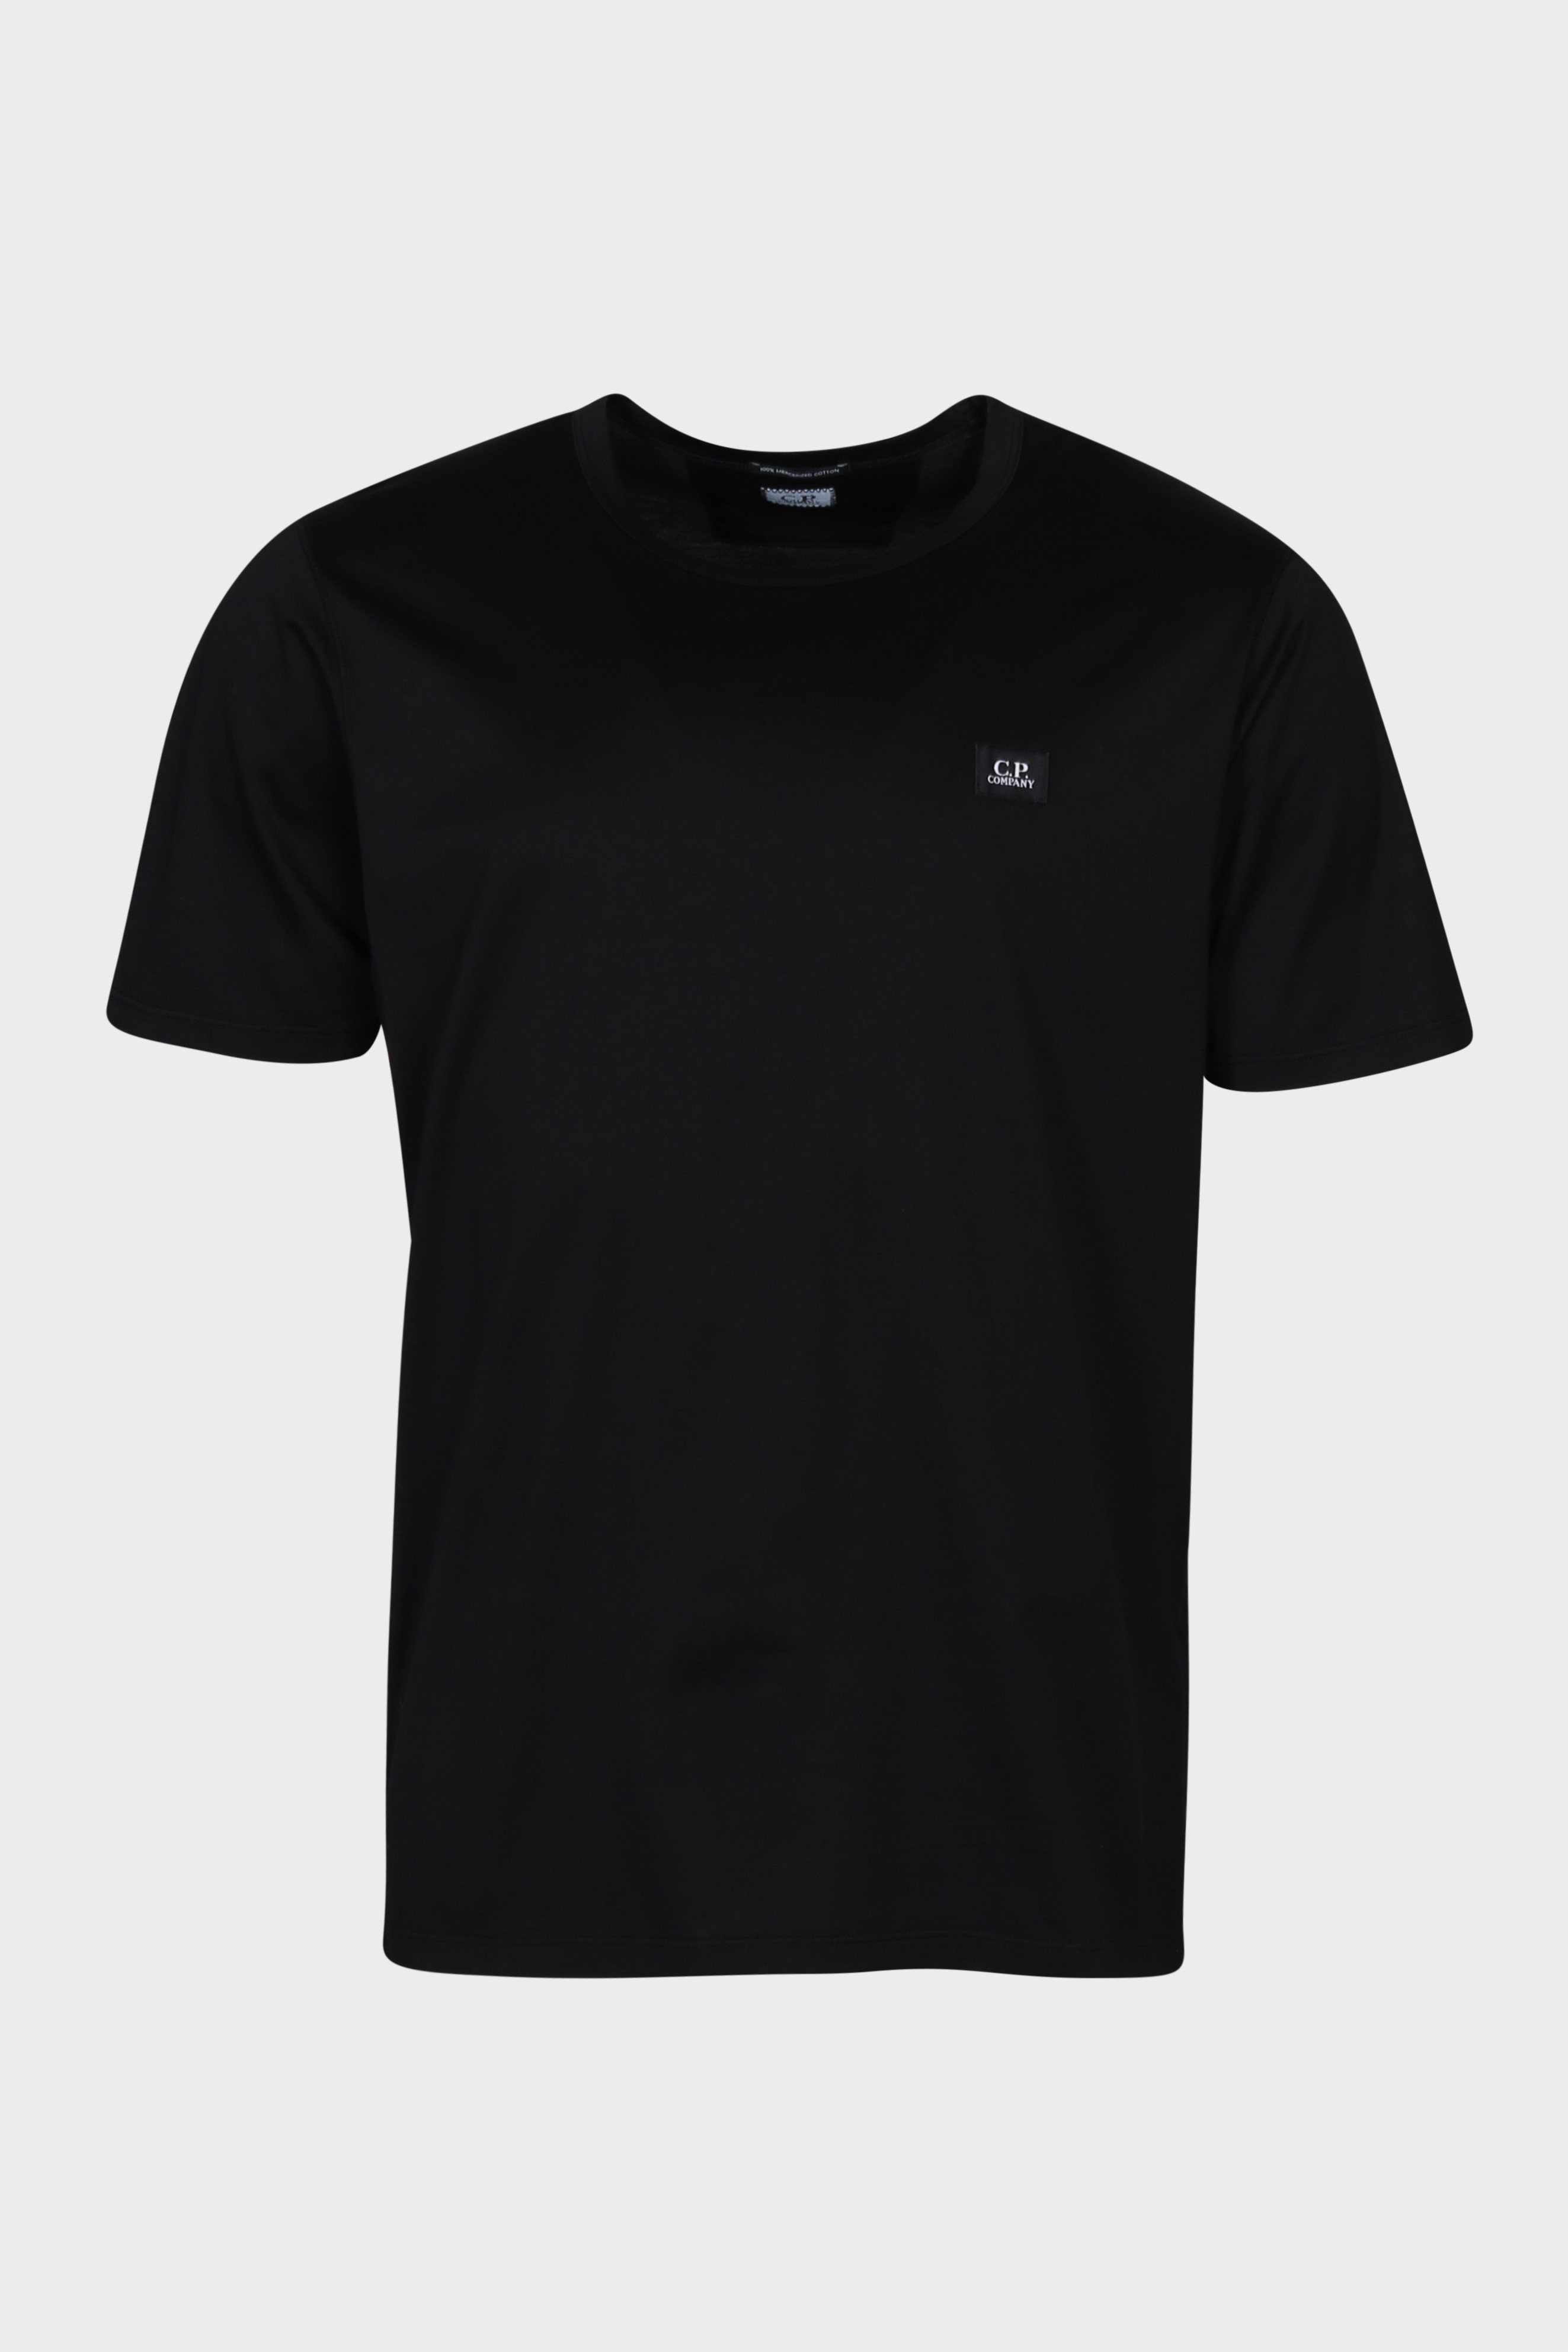 C.P. COMPANY T-Shirt in Black XL